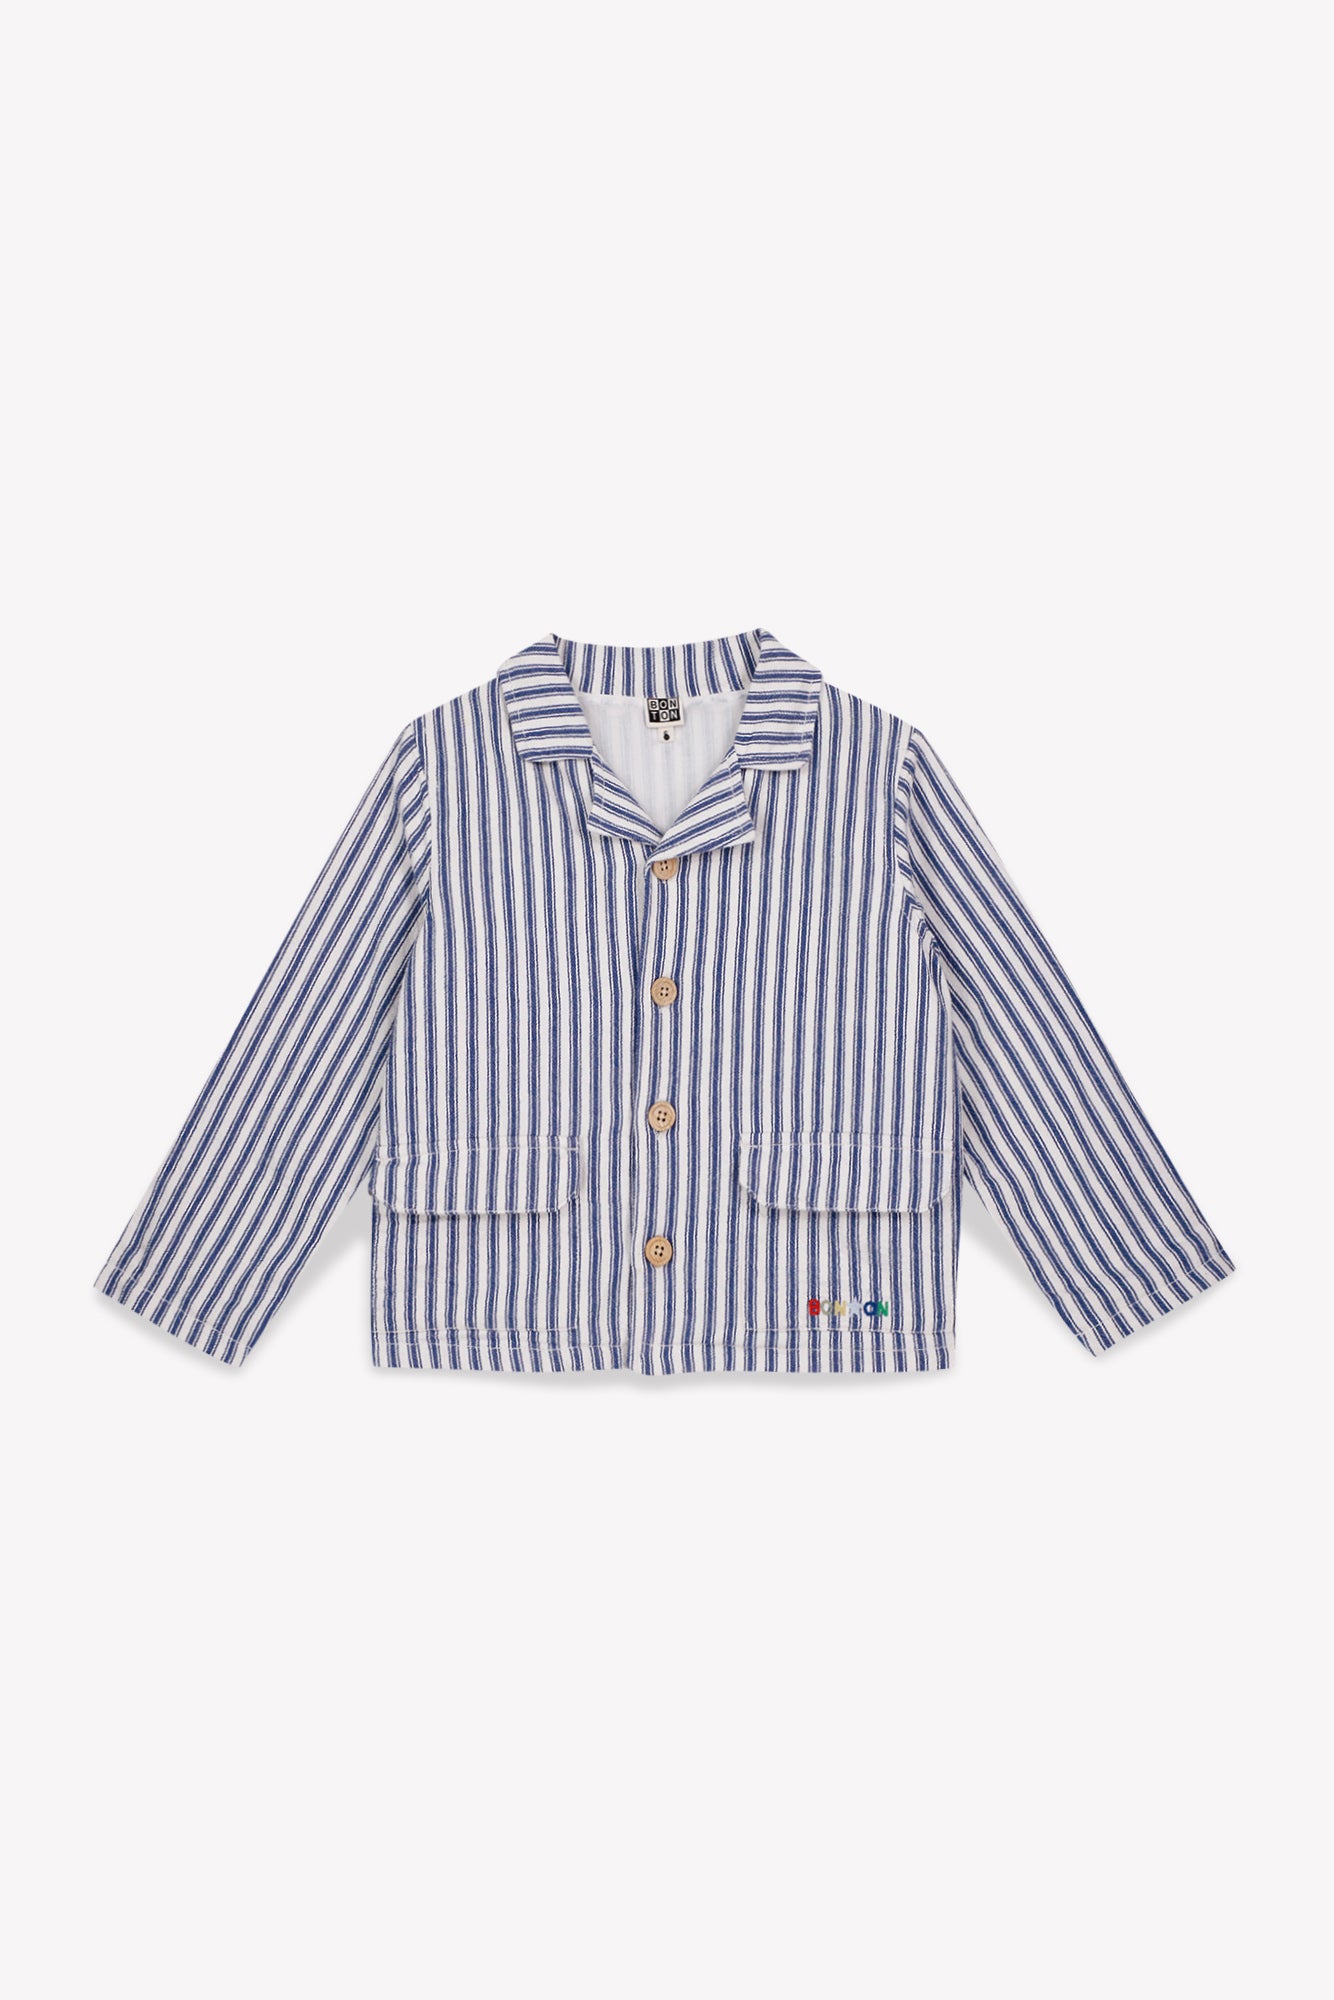 Jacket - Striped blue cotton twill